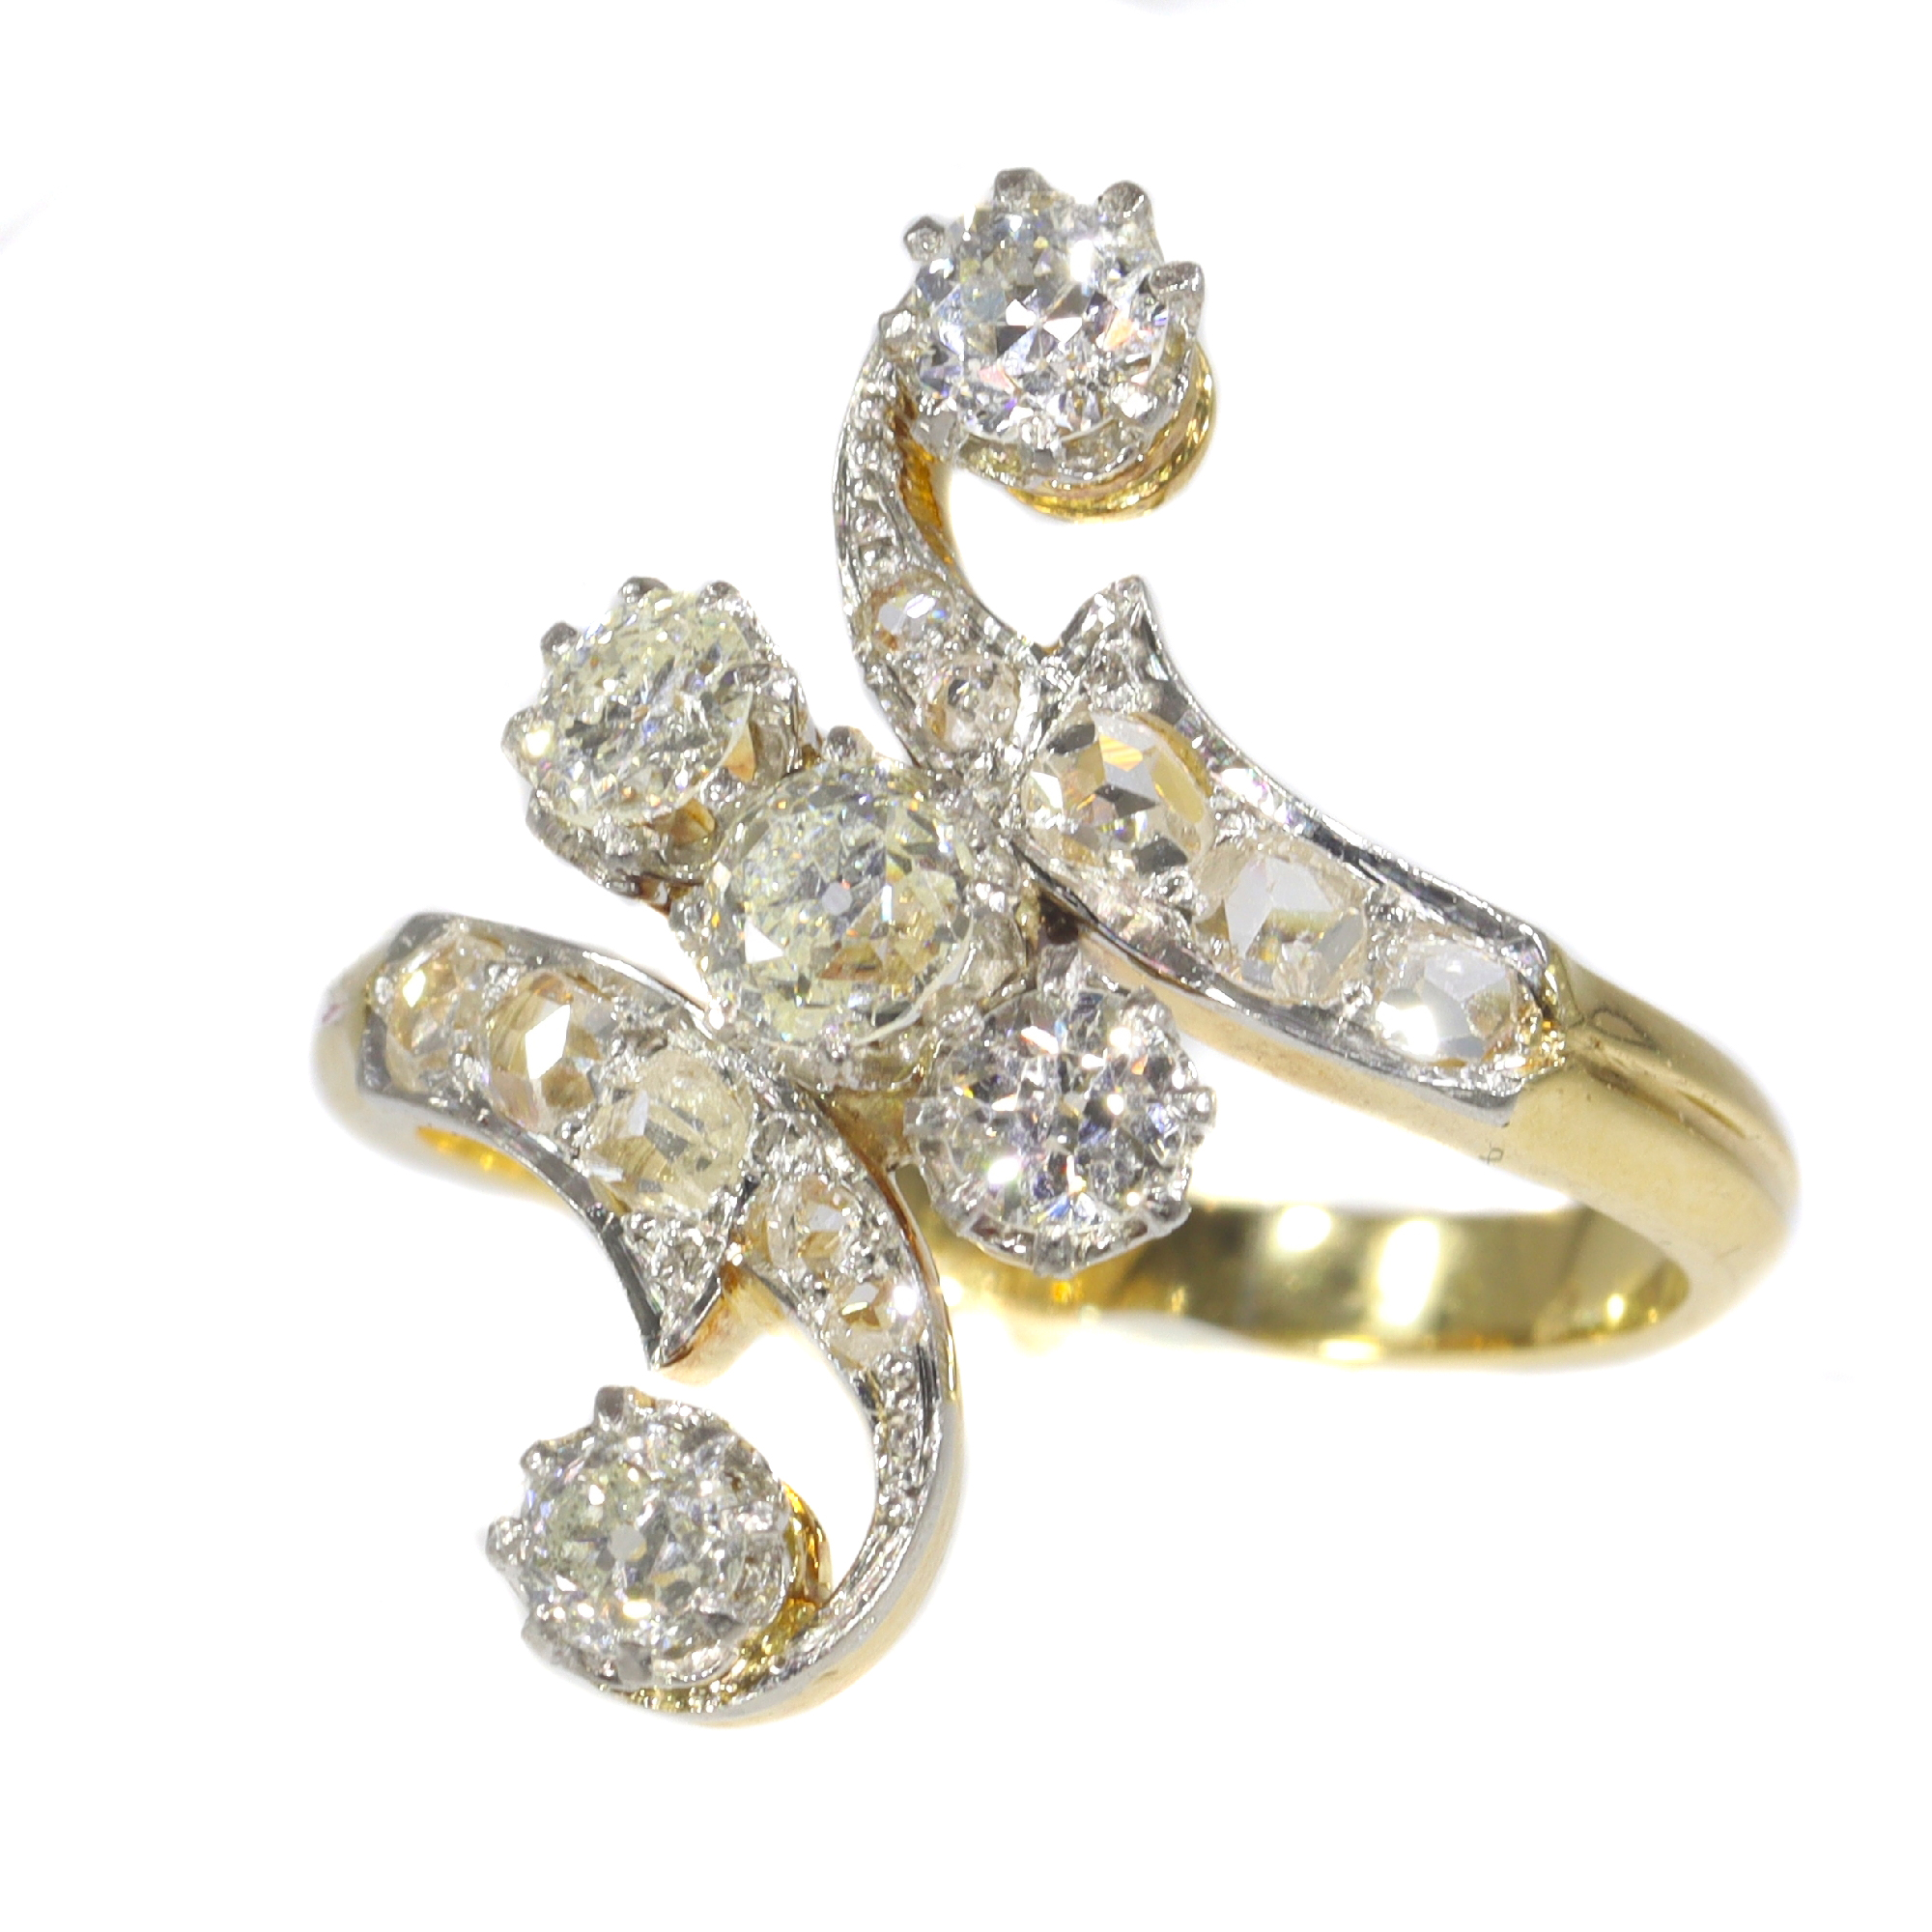 Heritage of Love: 1910's Diamond Engagement Ring